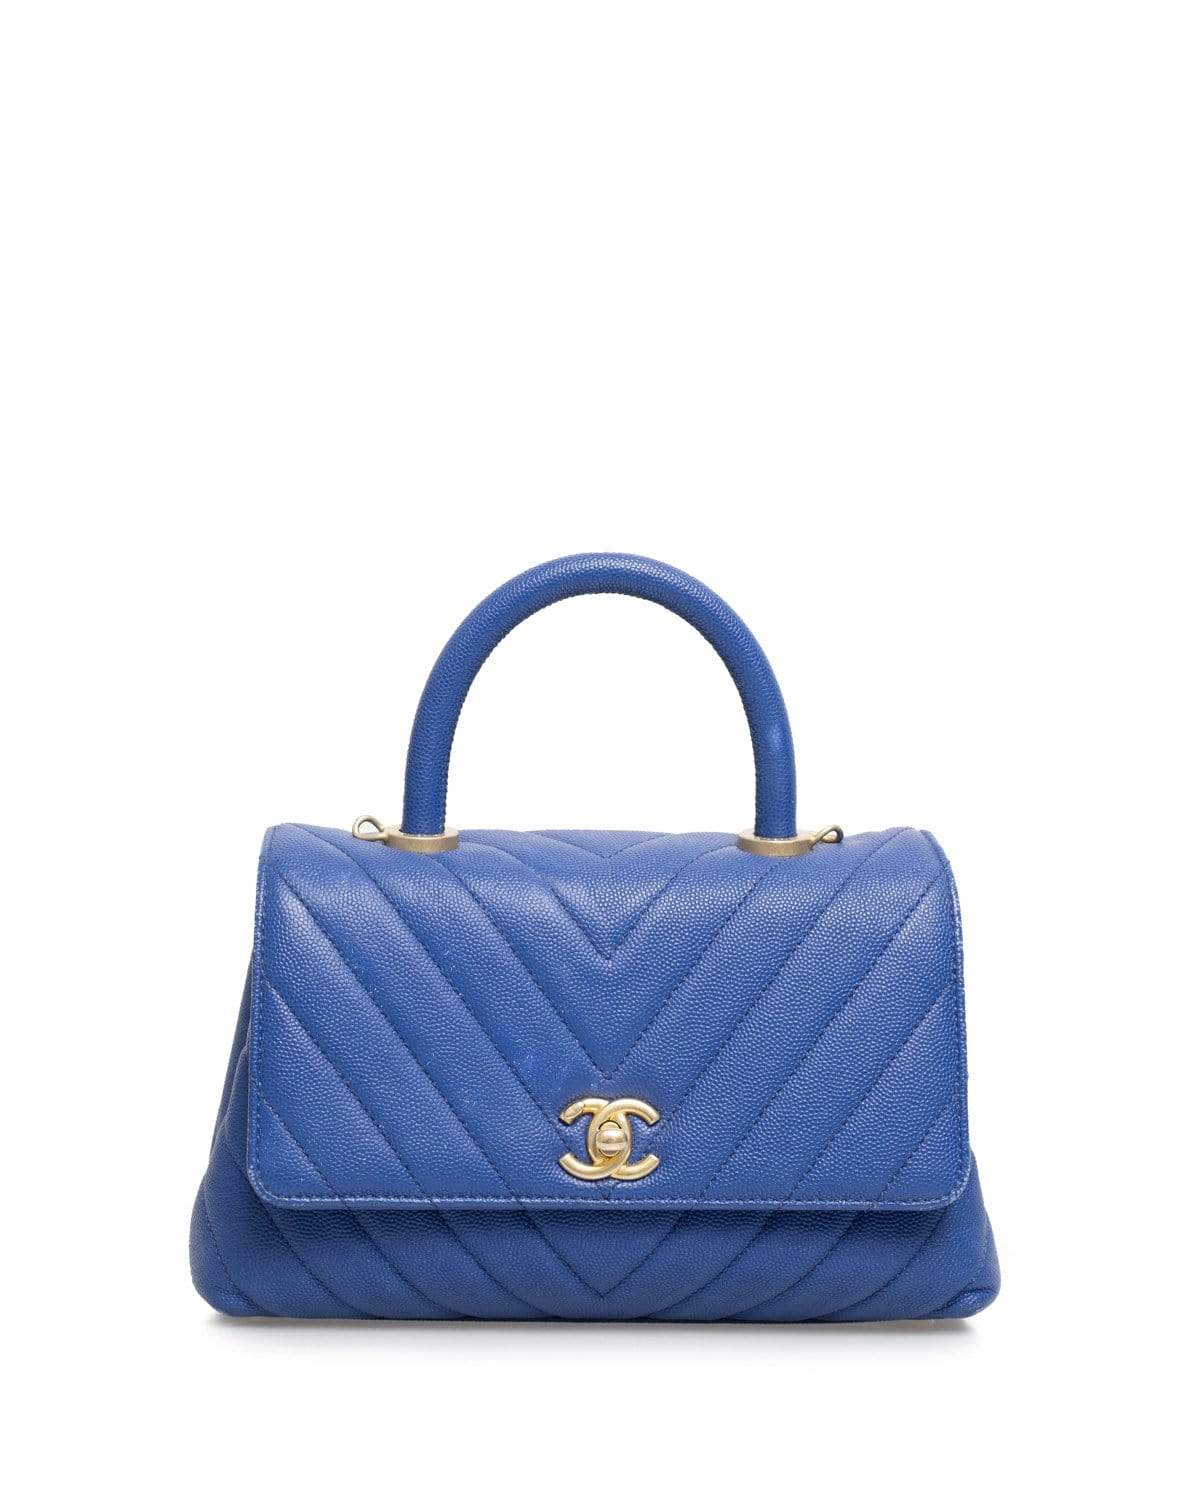 Chanel Chanel Caviar Coco Top Handle Blue Bag - ADL1603